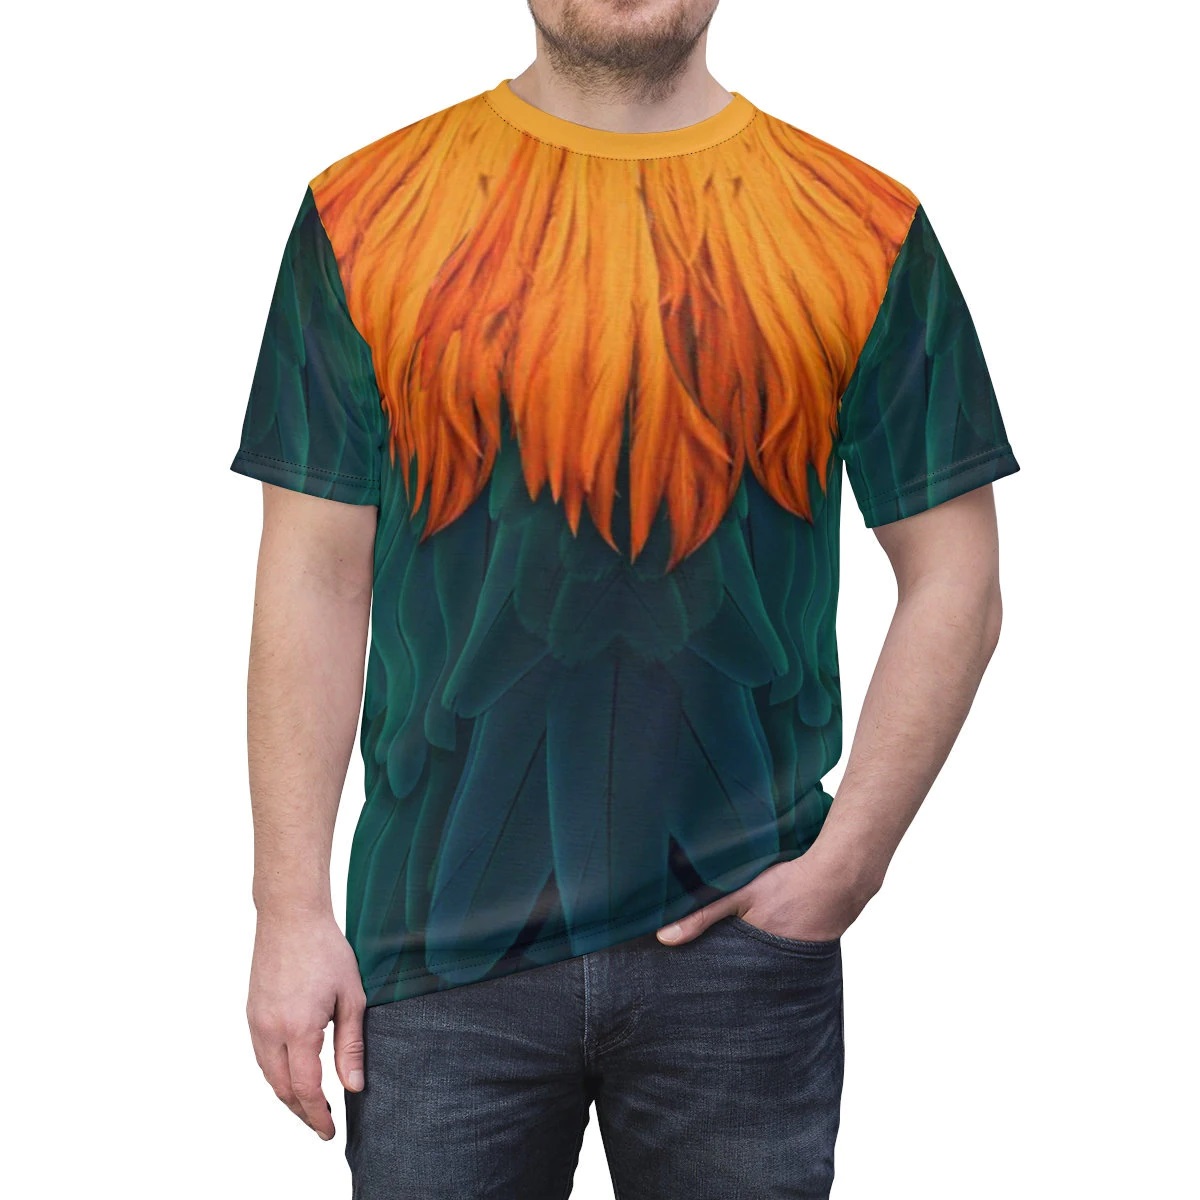 Hei Hei Unisex Shirt Moana Costume Moana Unisex Shirt Animal Kingdom Inspired